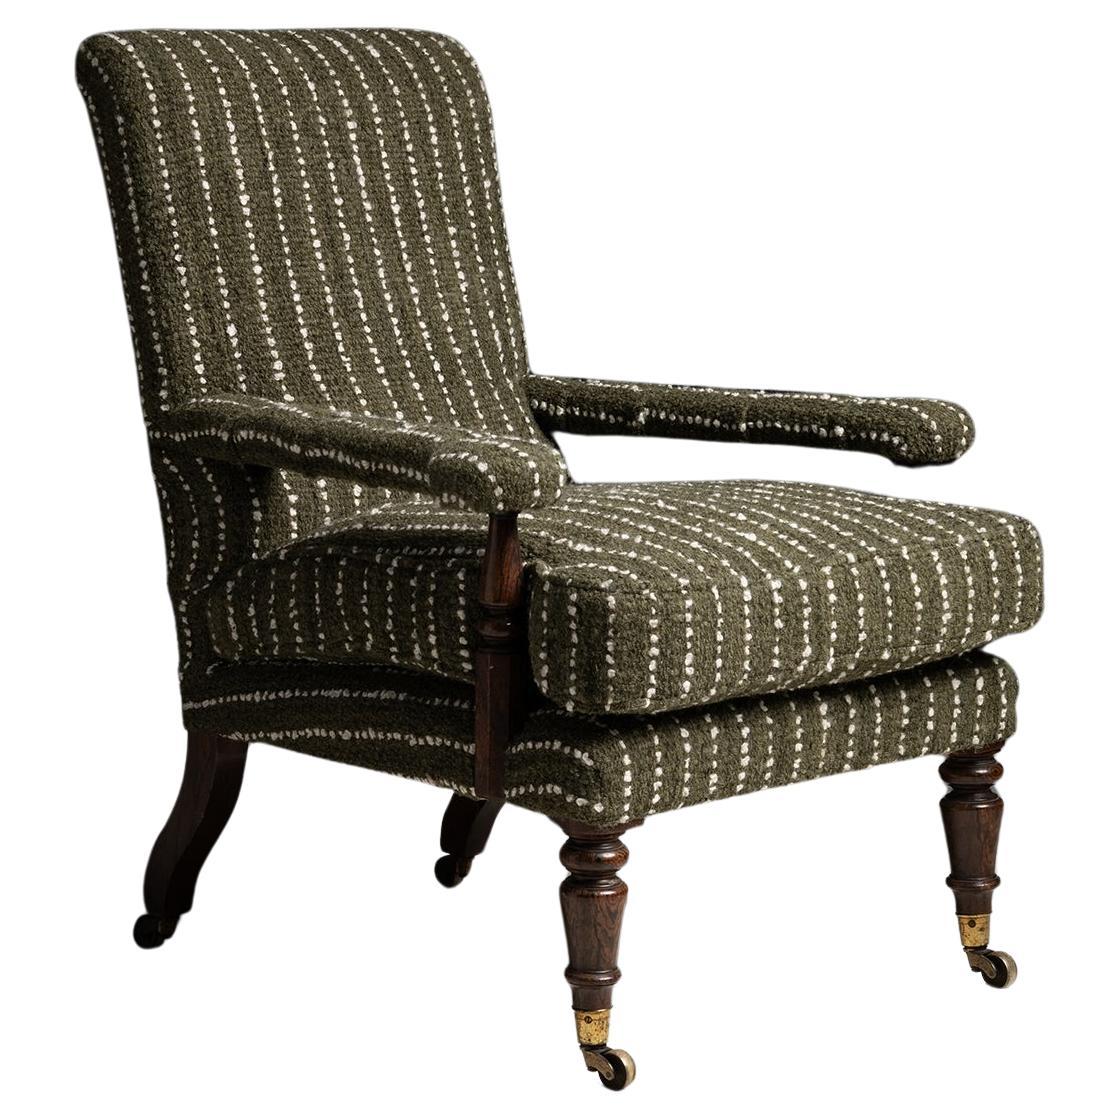 Miles & Edwards Armchair in Rosemary Hallgarten Fabric Circa 1840